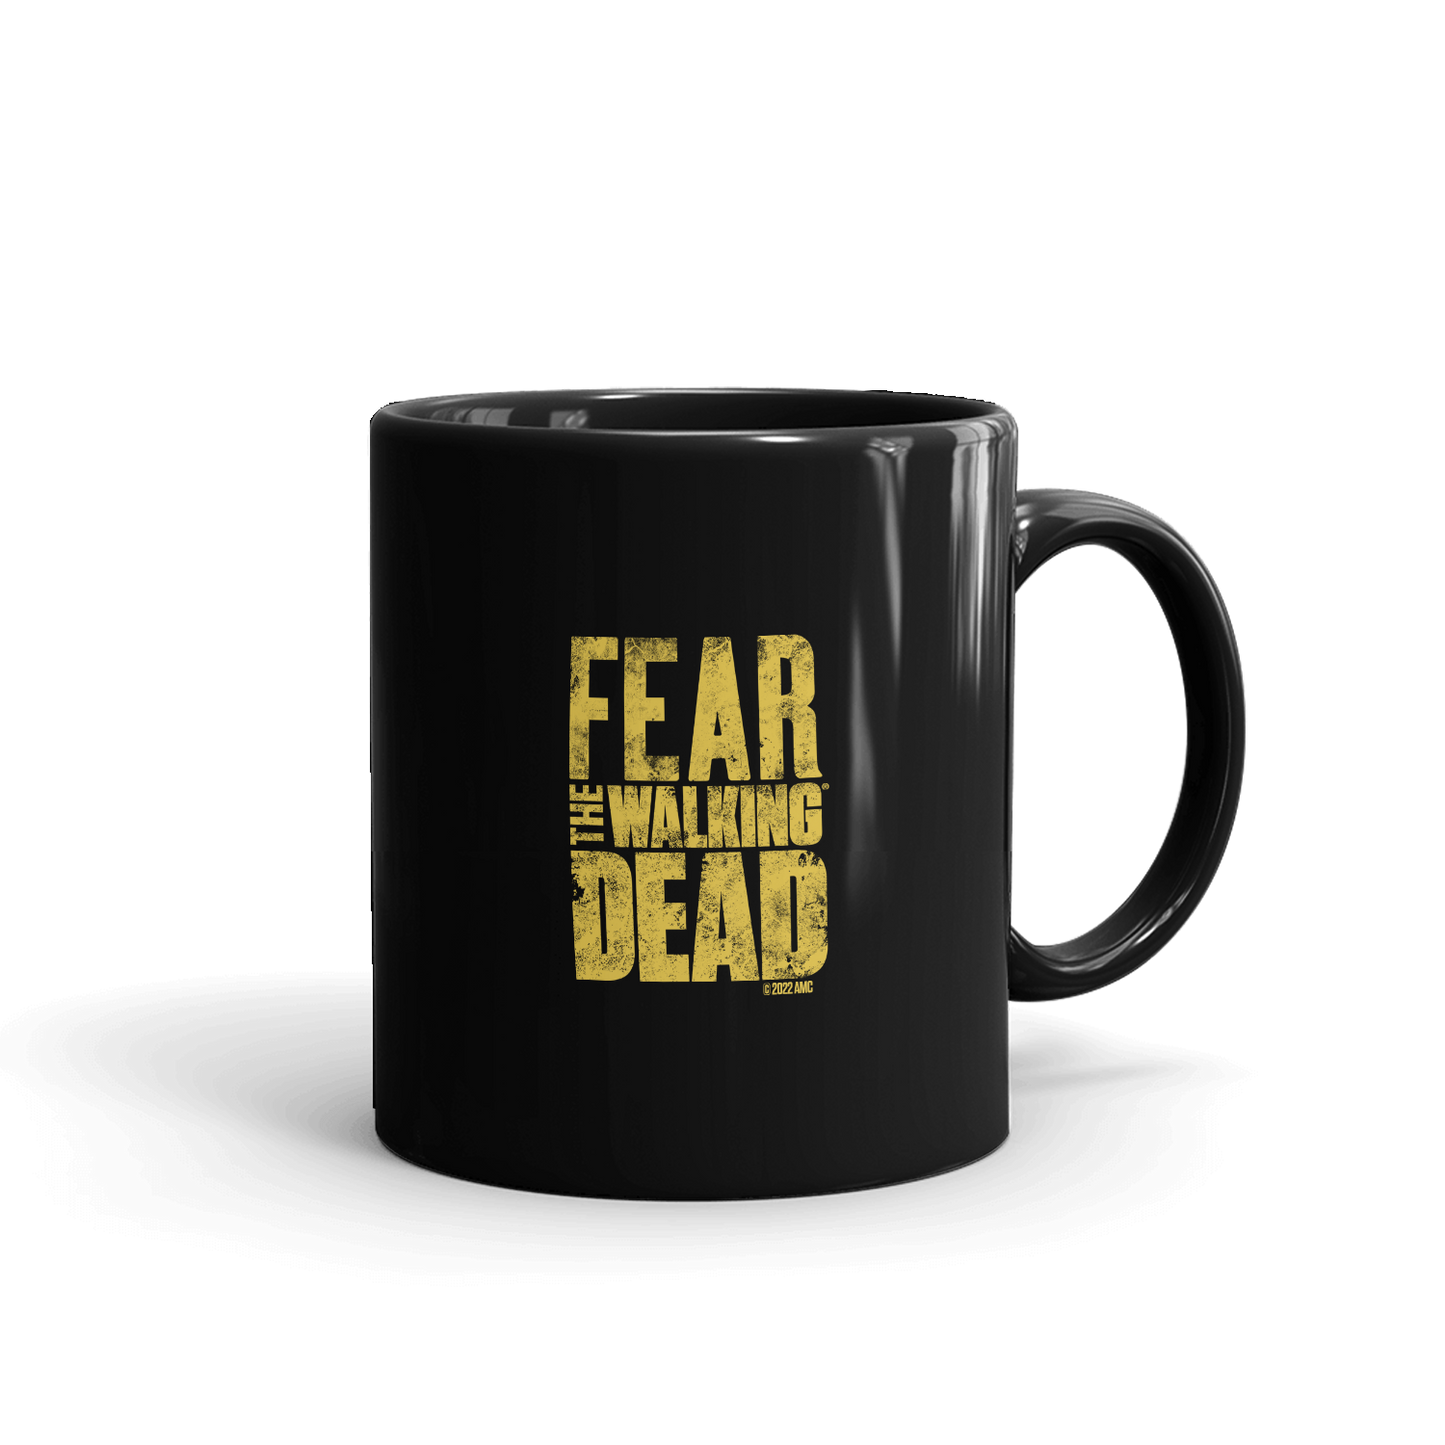 Fear The Walking Dead Season 7B Key Art Black Mug